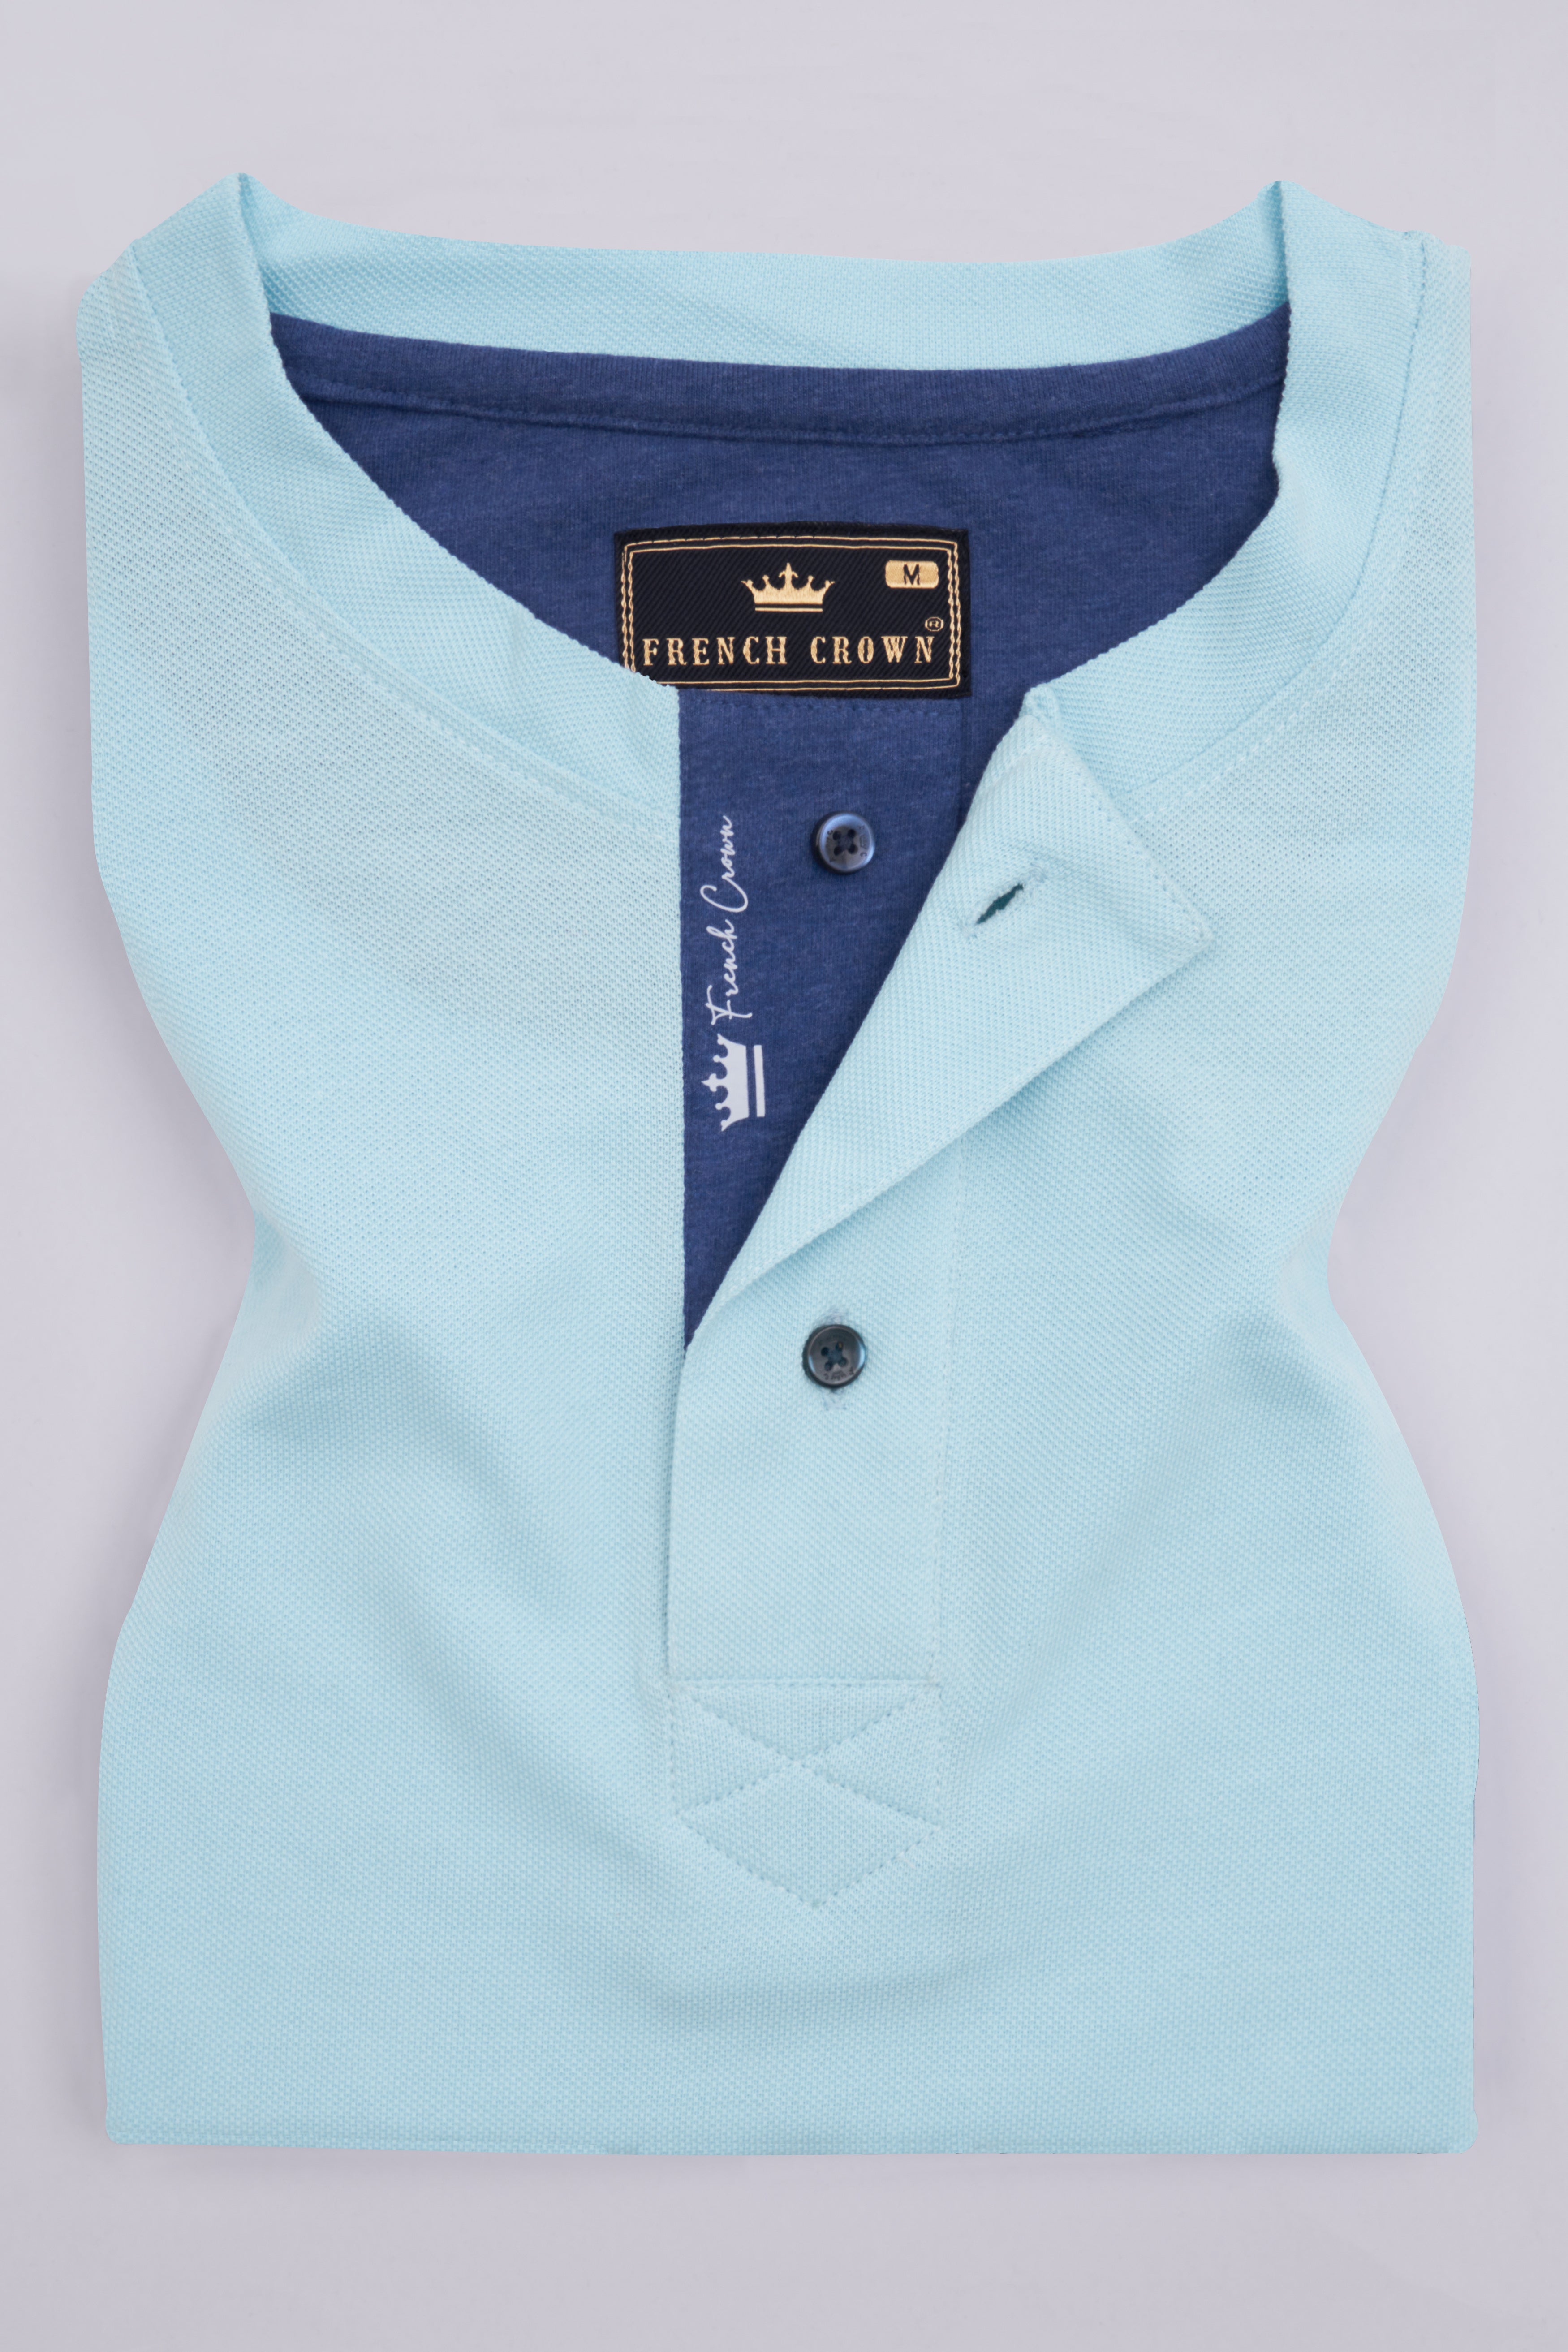 Spindle Blue Premium Cotton Round Neck Pique T-Shirt TS899-S, TS899-M, TS899-L, TS899-XL, TS899-XXL